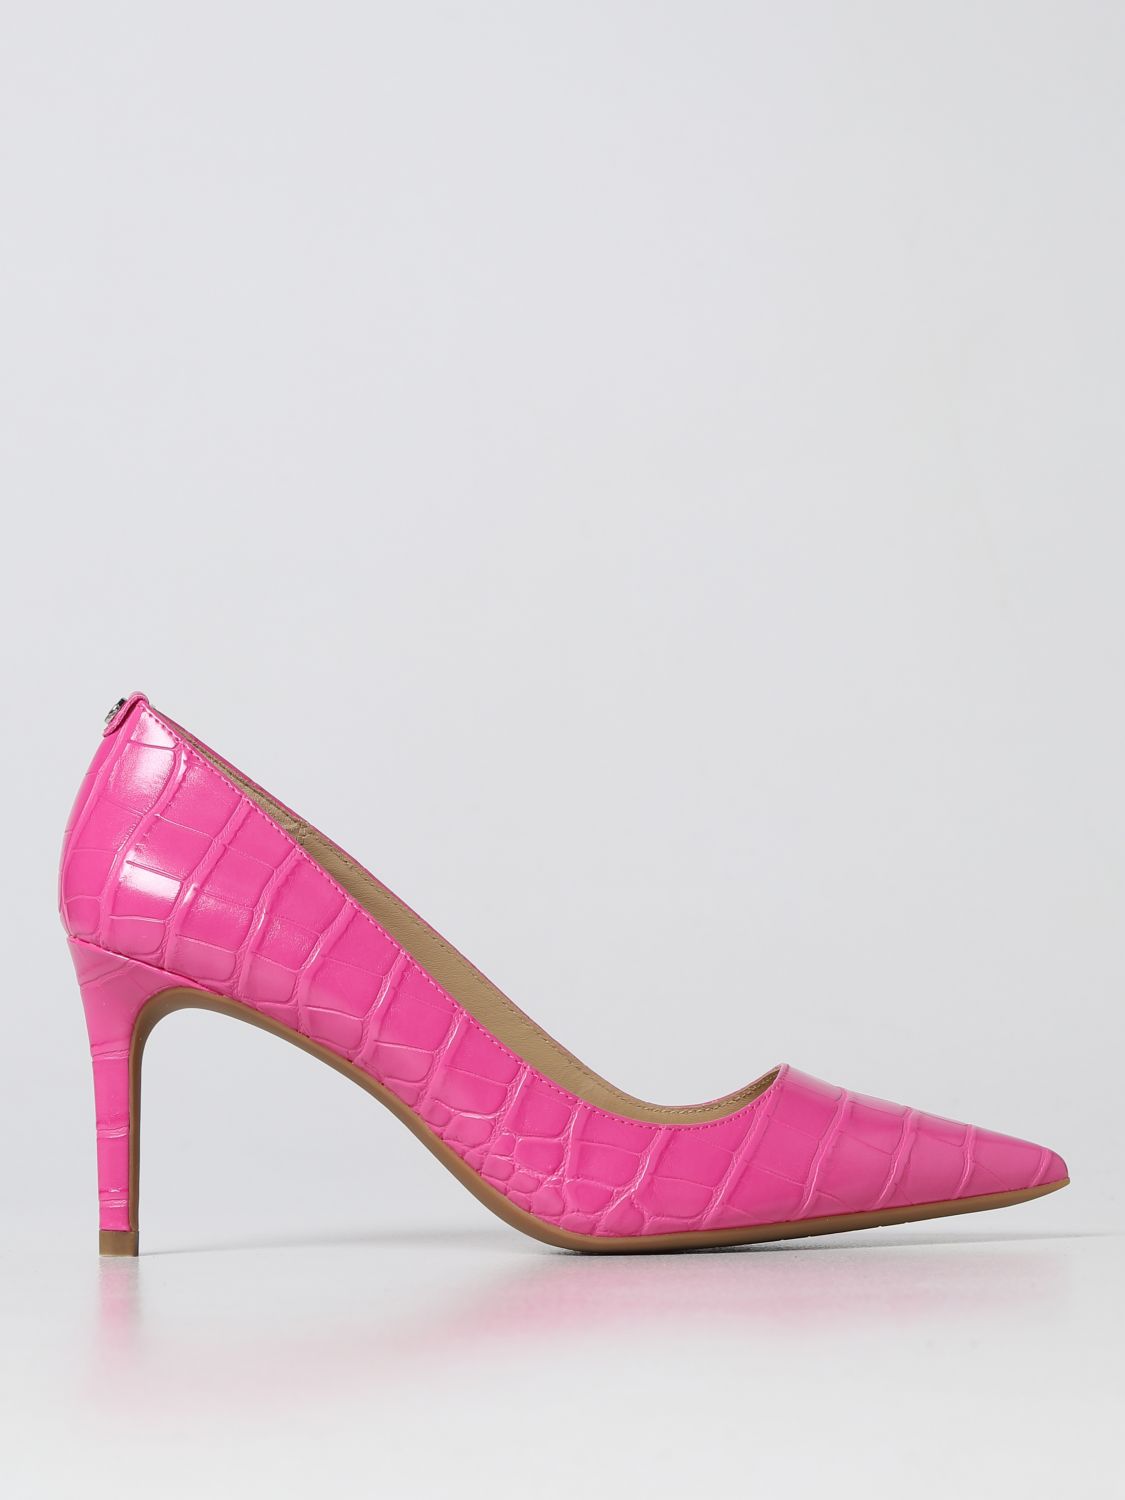 Total 75+ imagen michael kors pink shoes - Abzlocal.mx